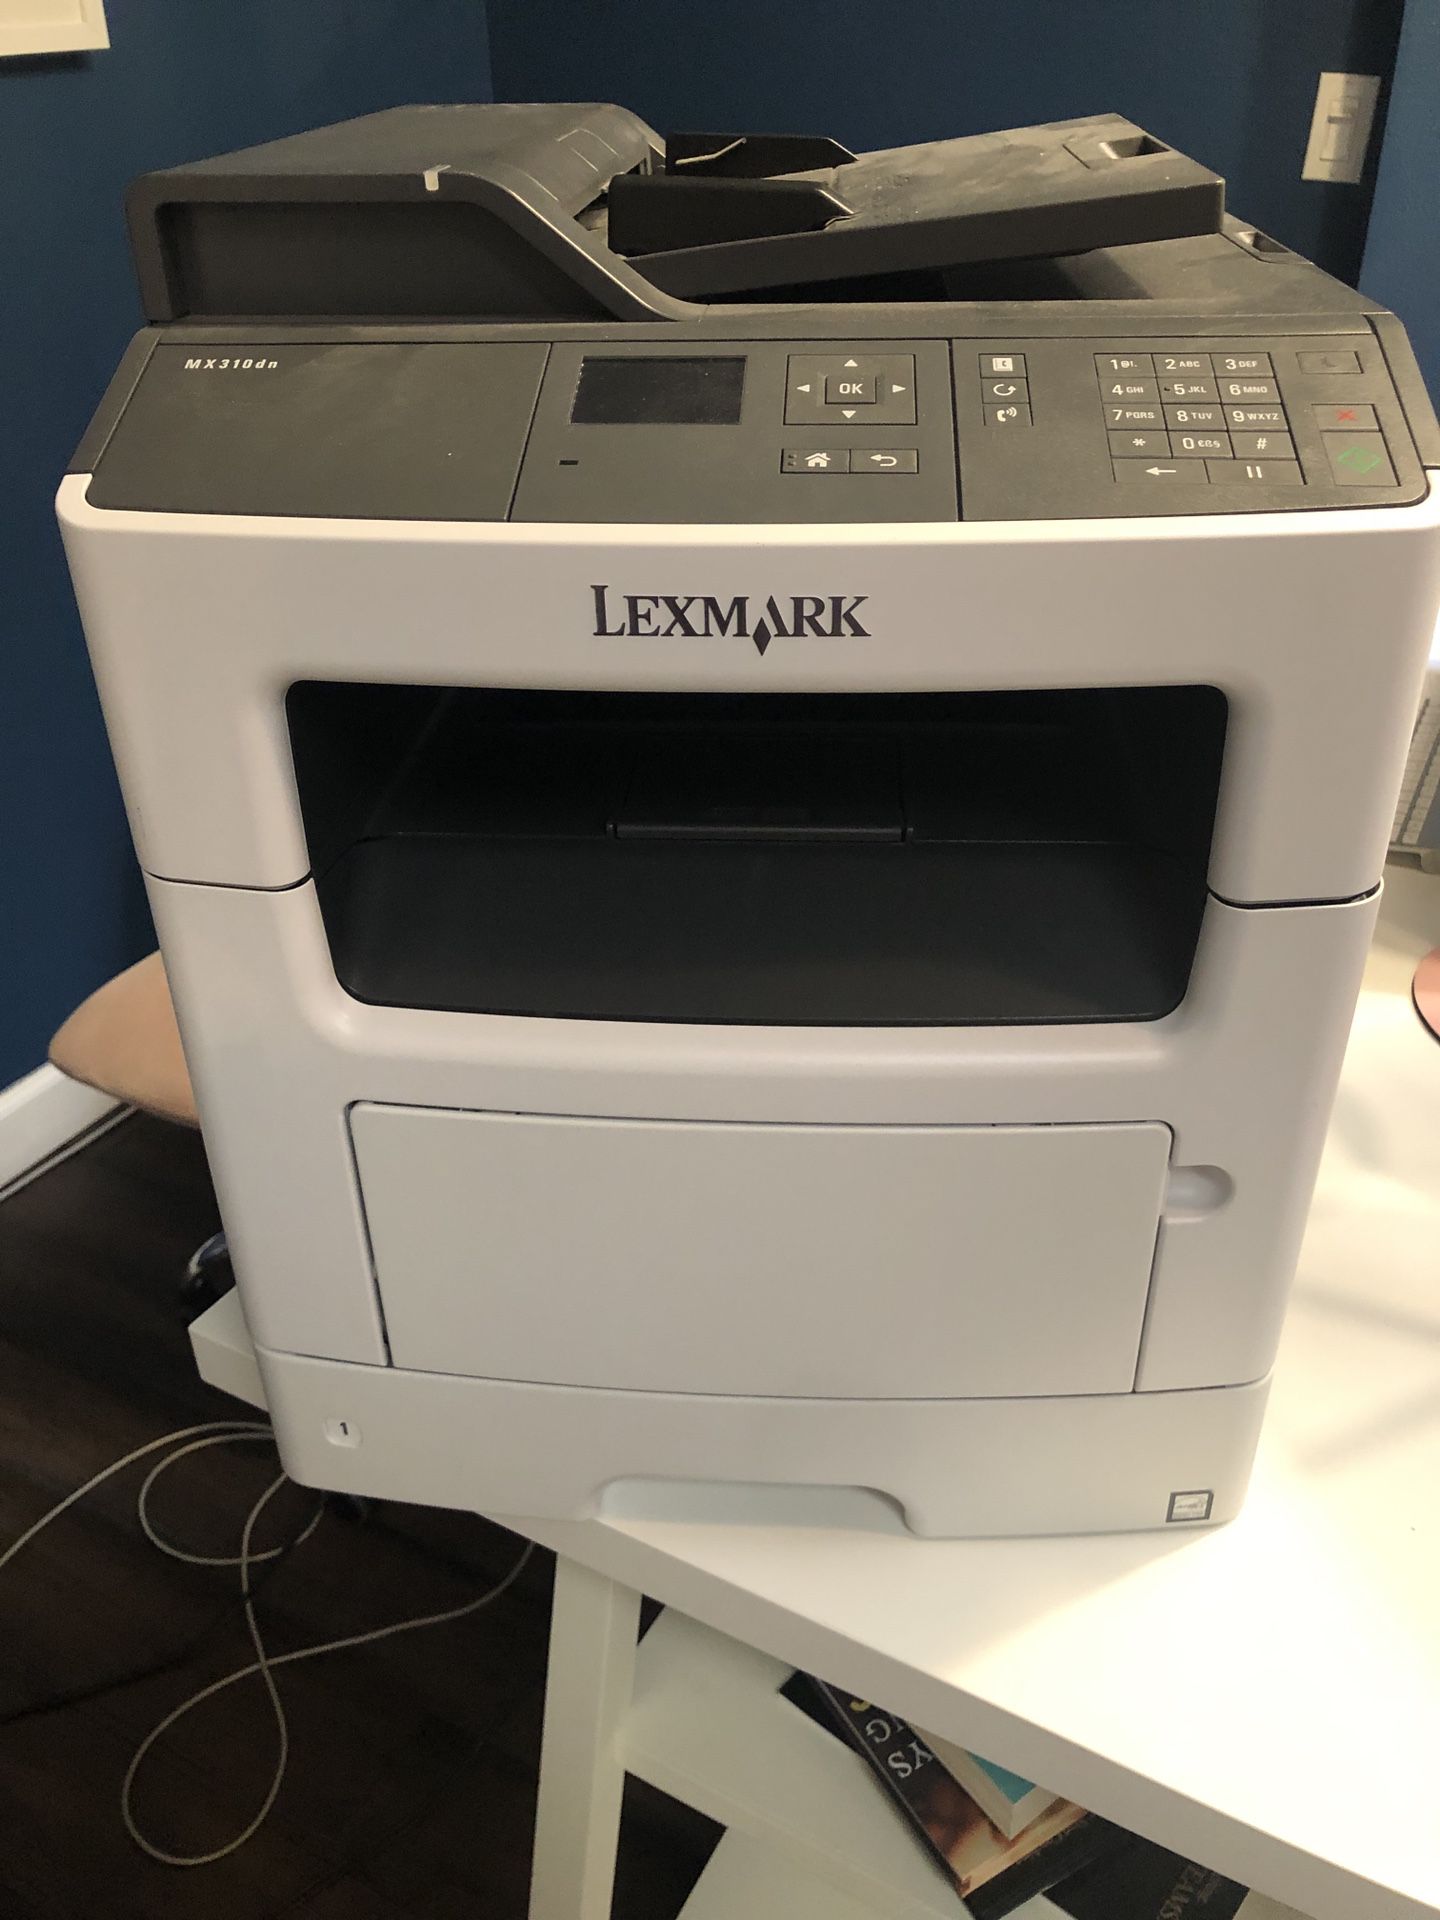 Lexmark Mx 310dn printer, scanner,fax